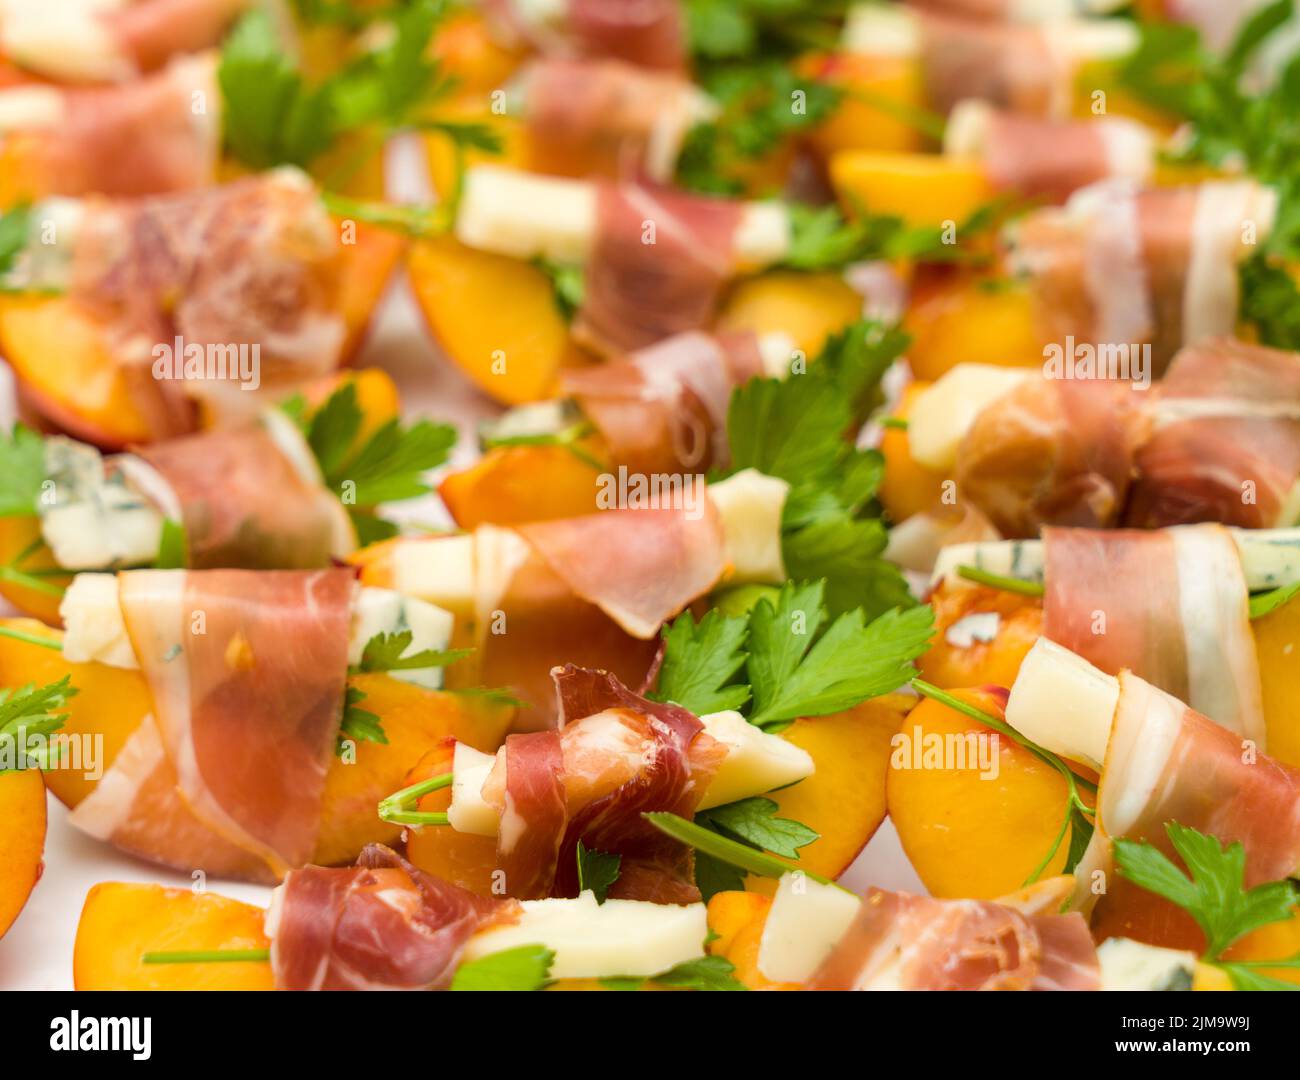 Many small peach and gorgonzola wrapped prosciutto snacks Stock Photo